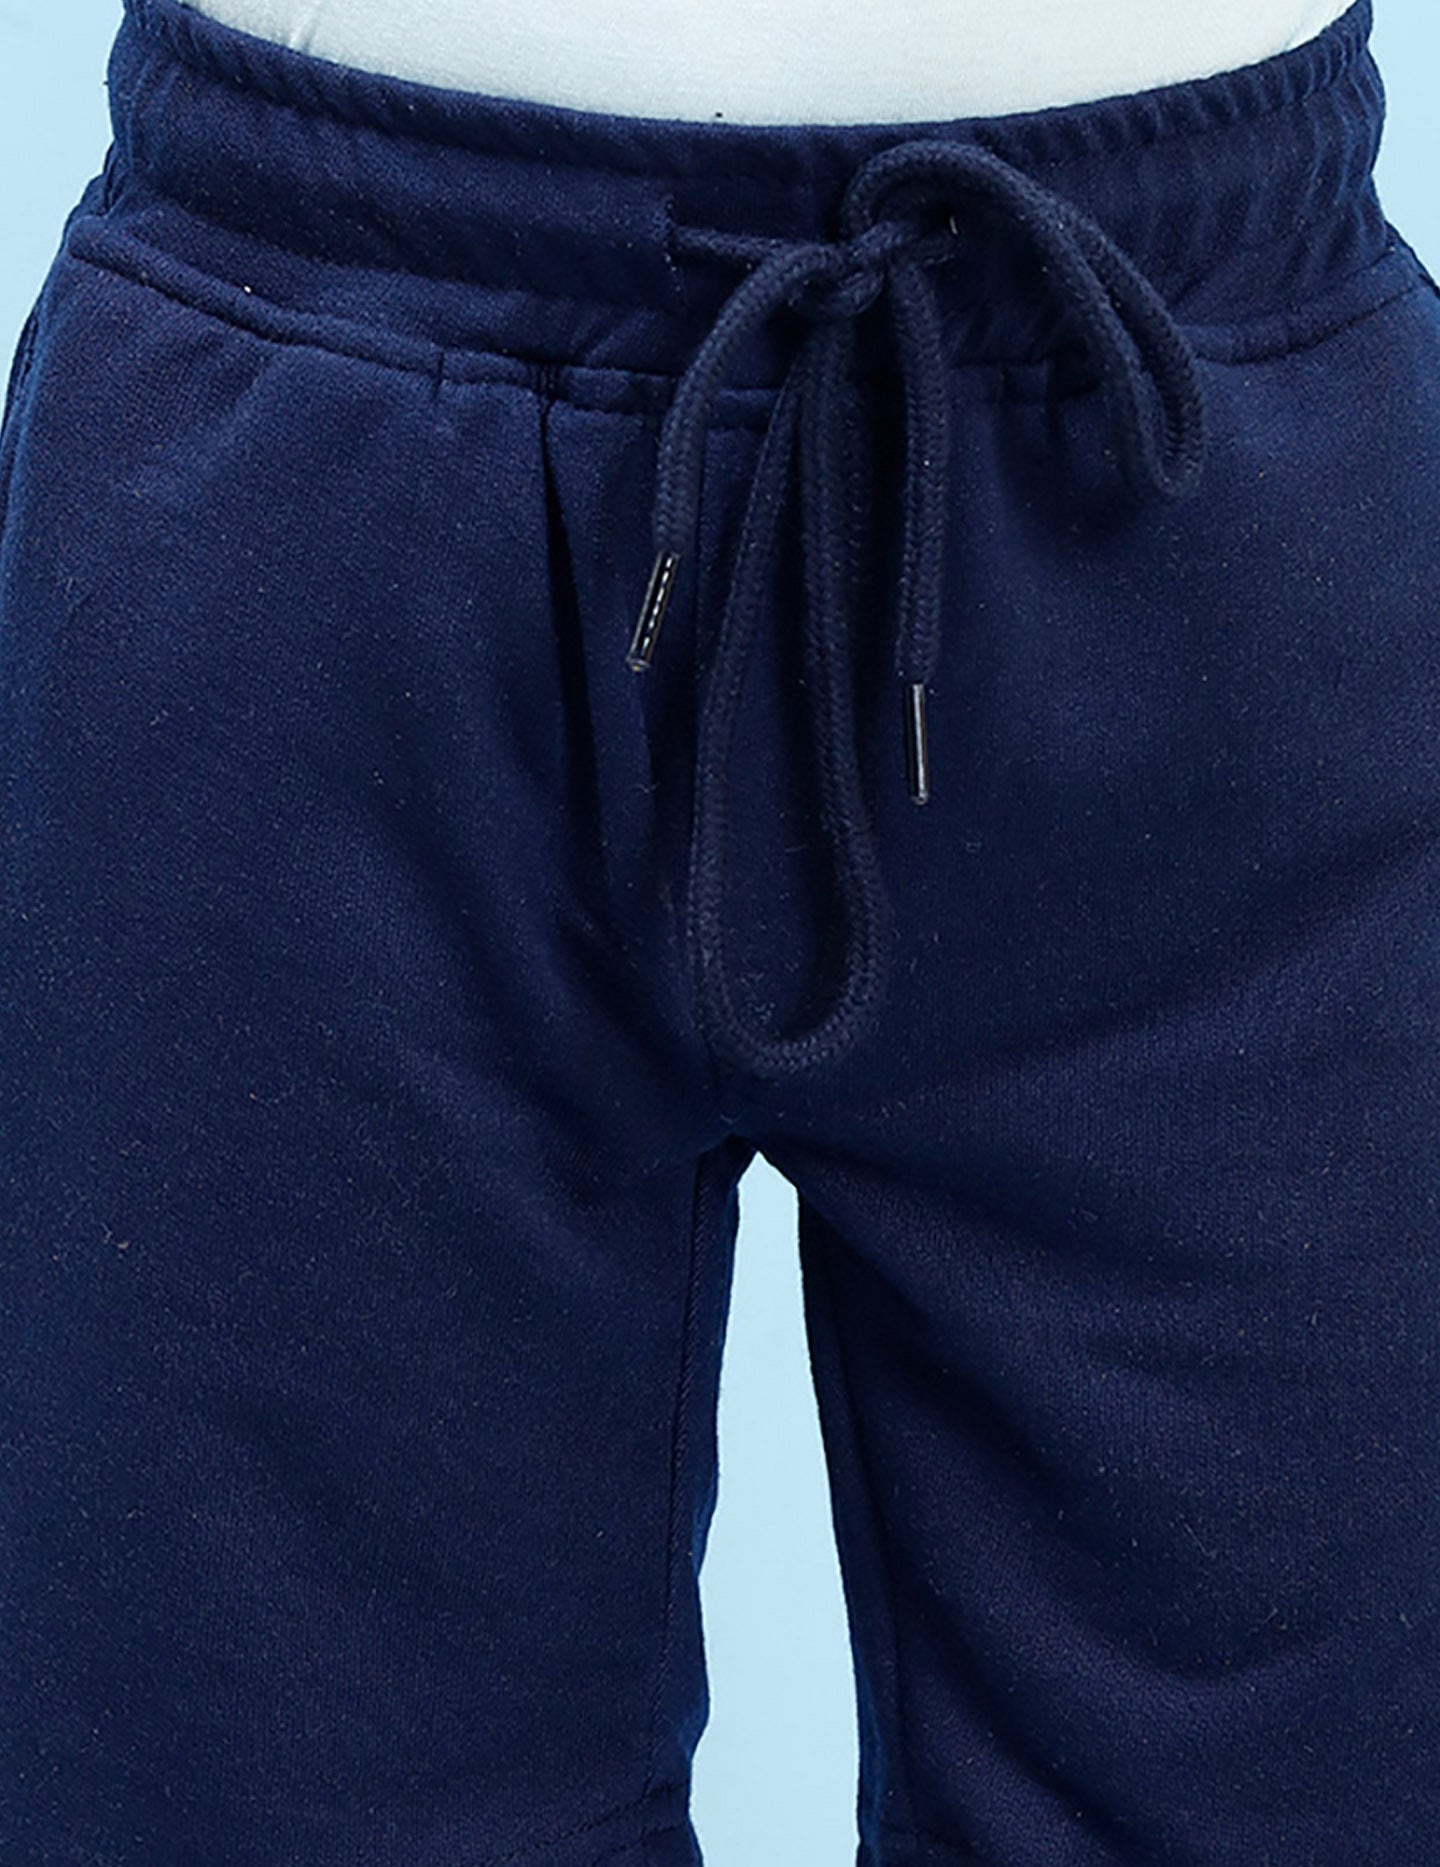 Nusyl Champ Printed Navy Blue Boys Shorts